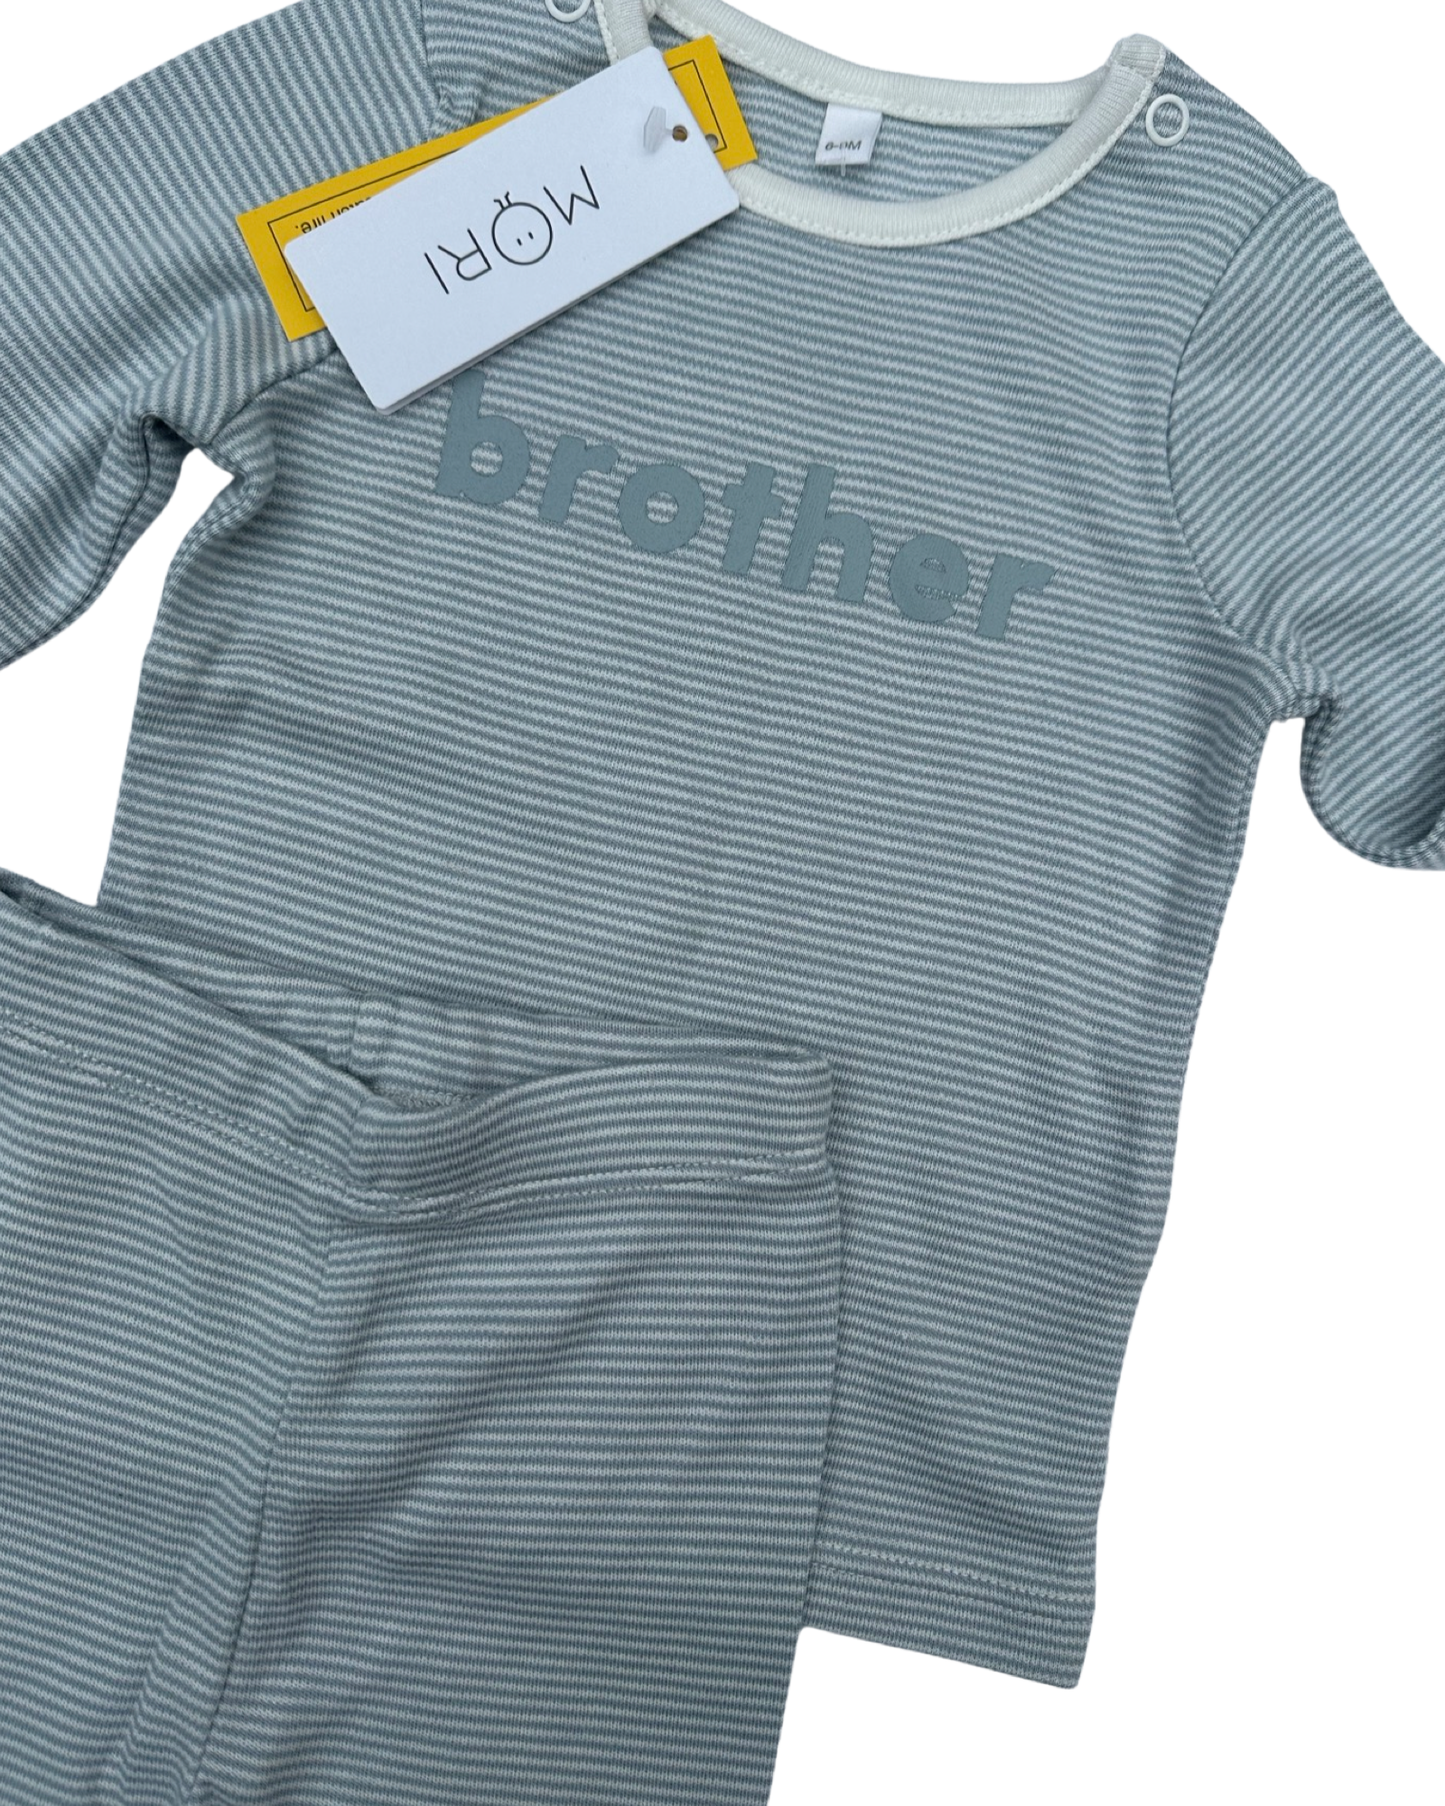 Mori 'Brother' slogan pyjamas (size 6-9mths)